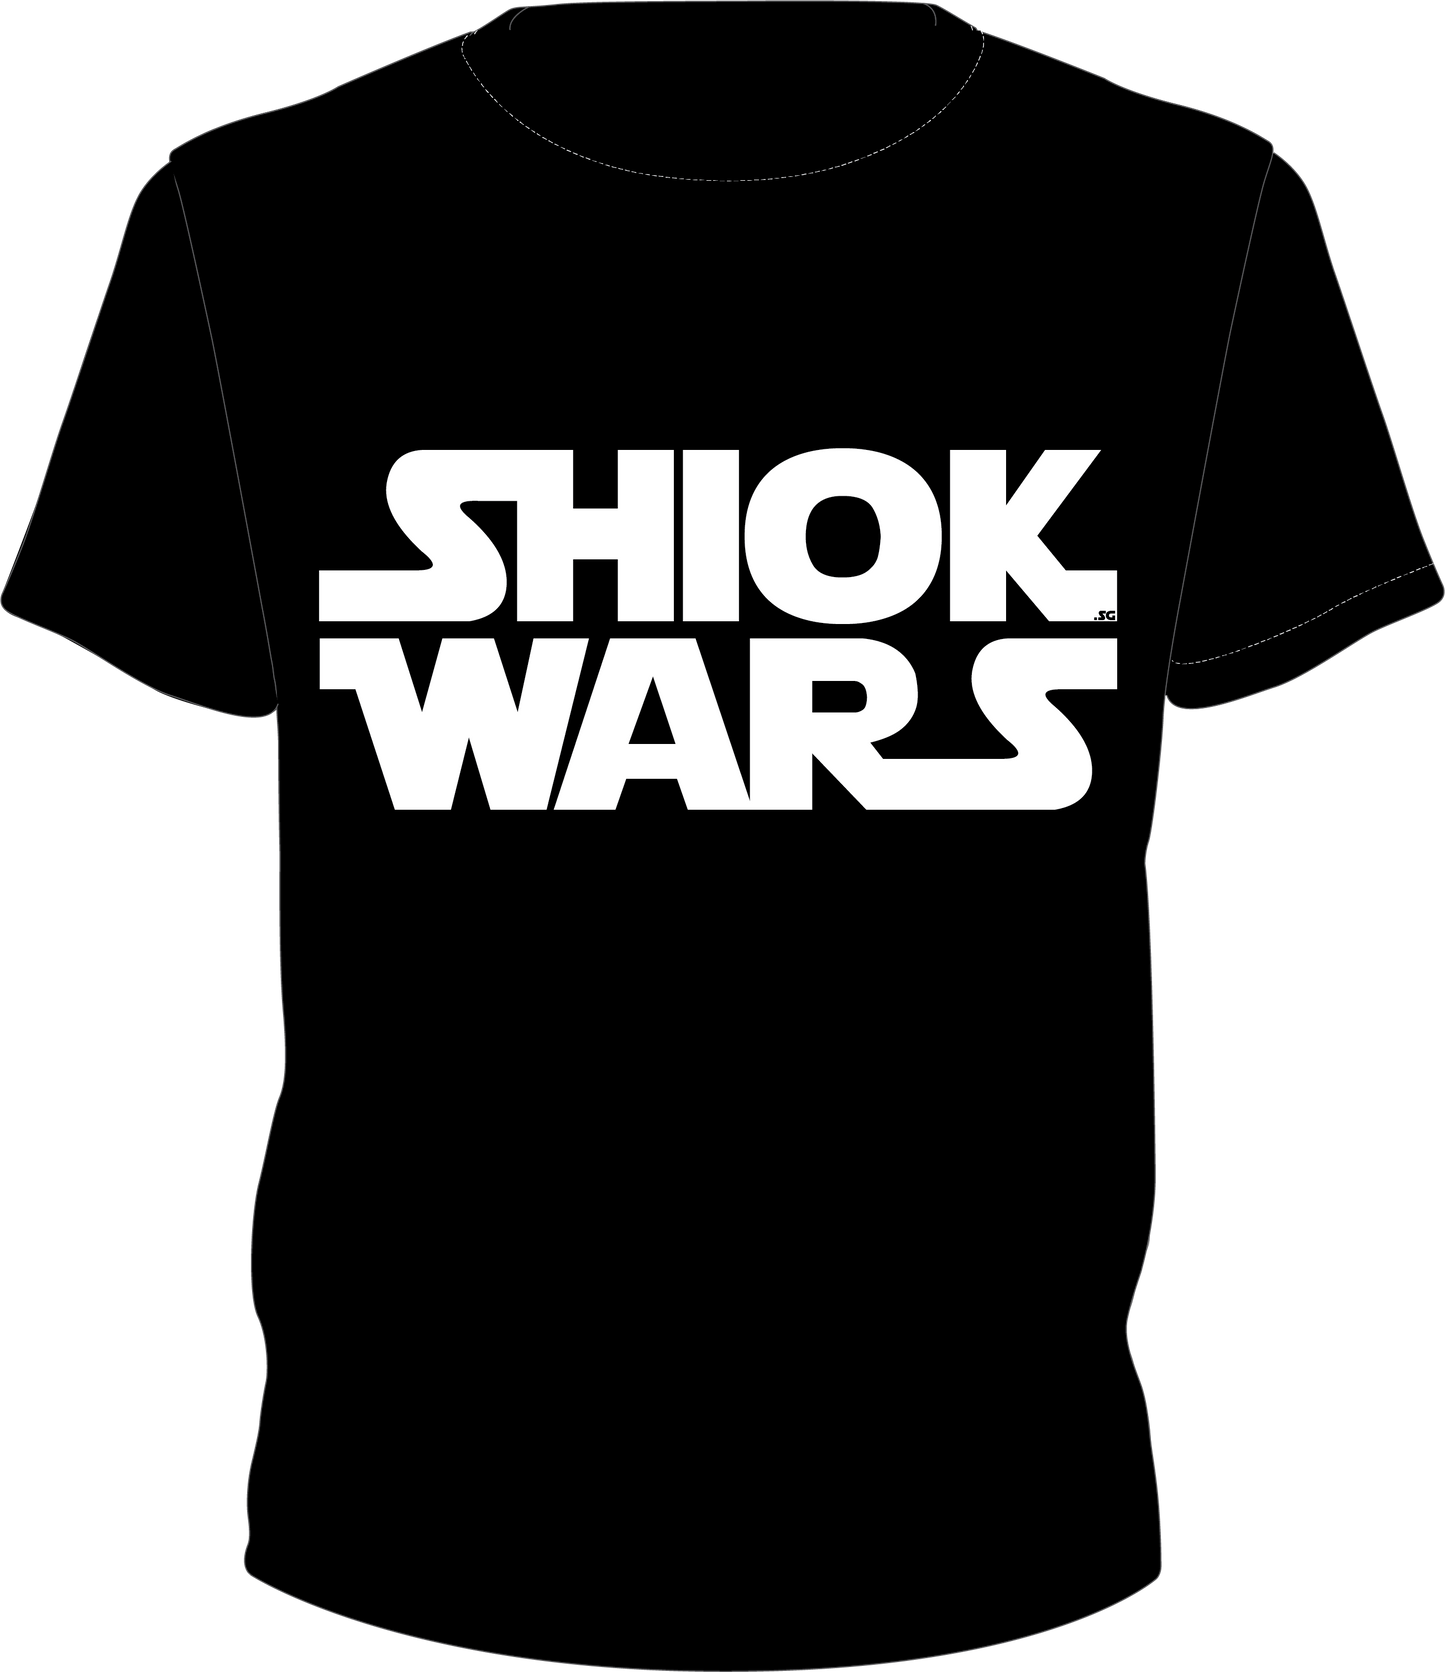 Shiok Wars